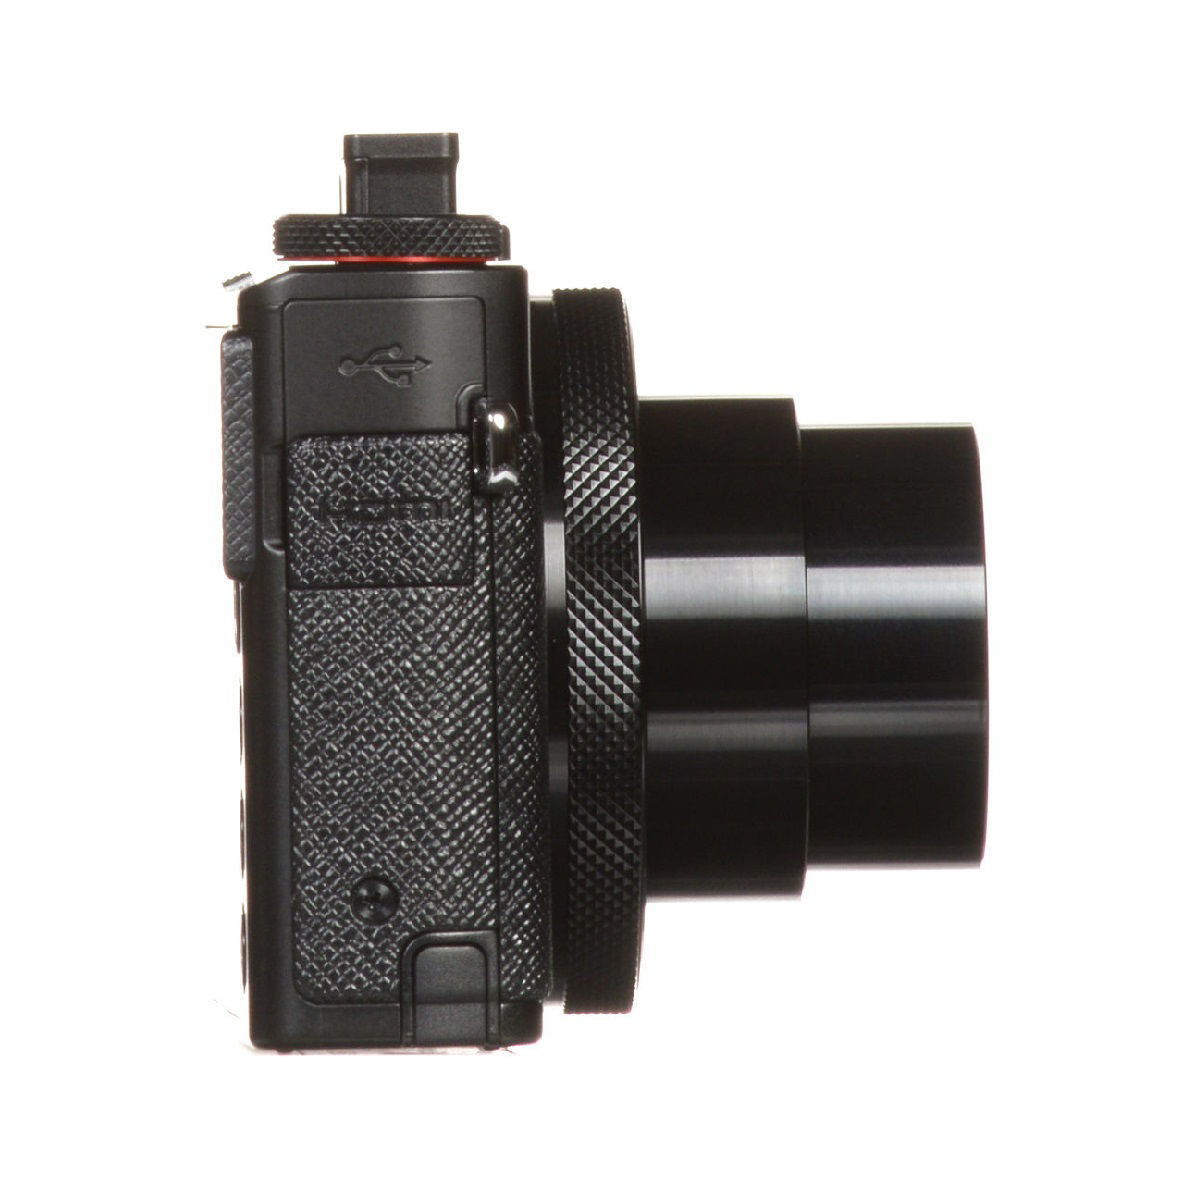 Canon Powershot G9 X Mark ii Digital Camera Black